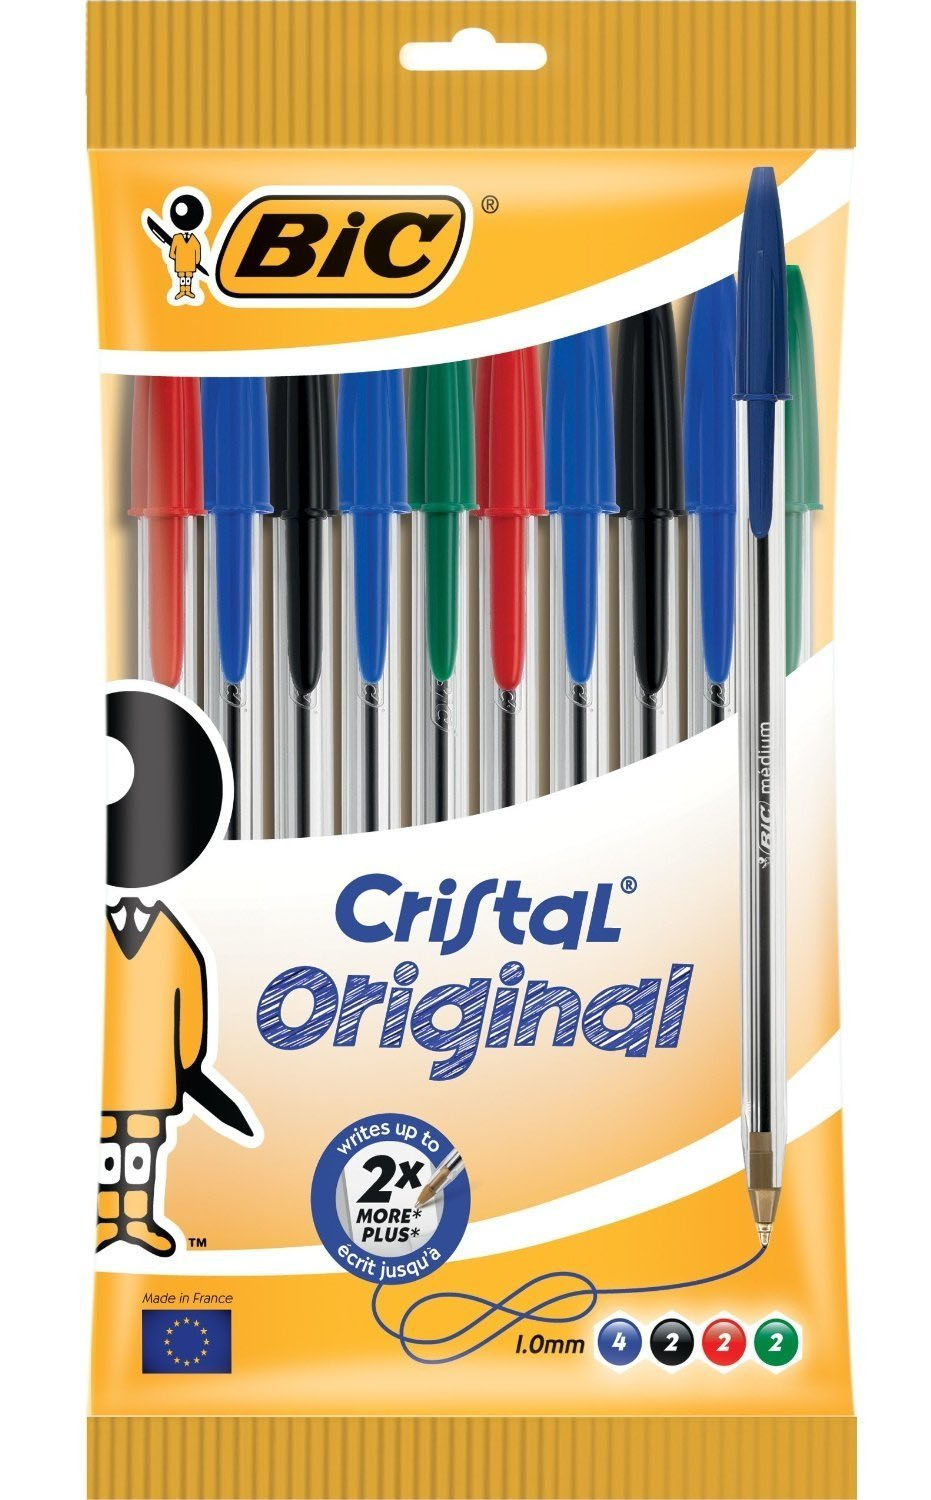 BIC Cristal Original Fountain Pen, 1.6 mm,880656